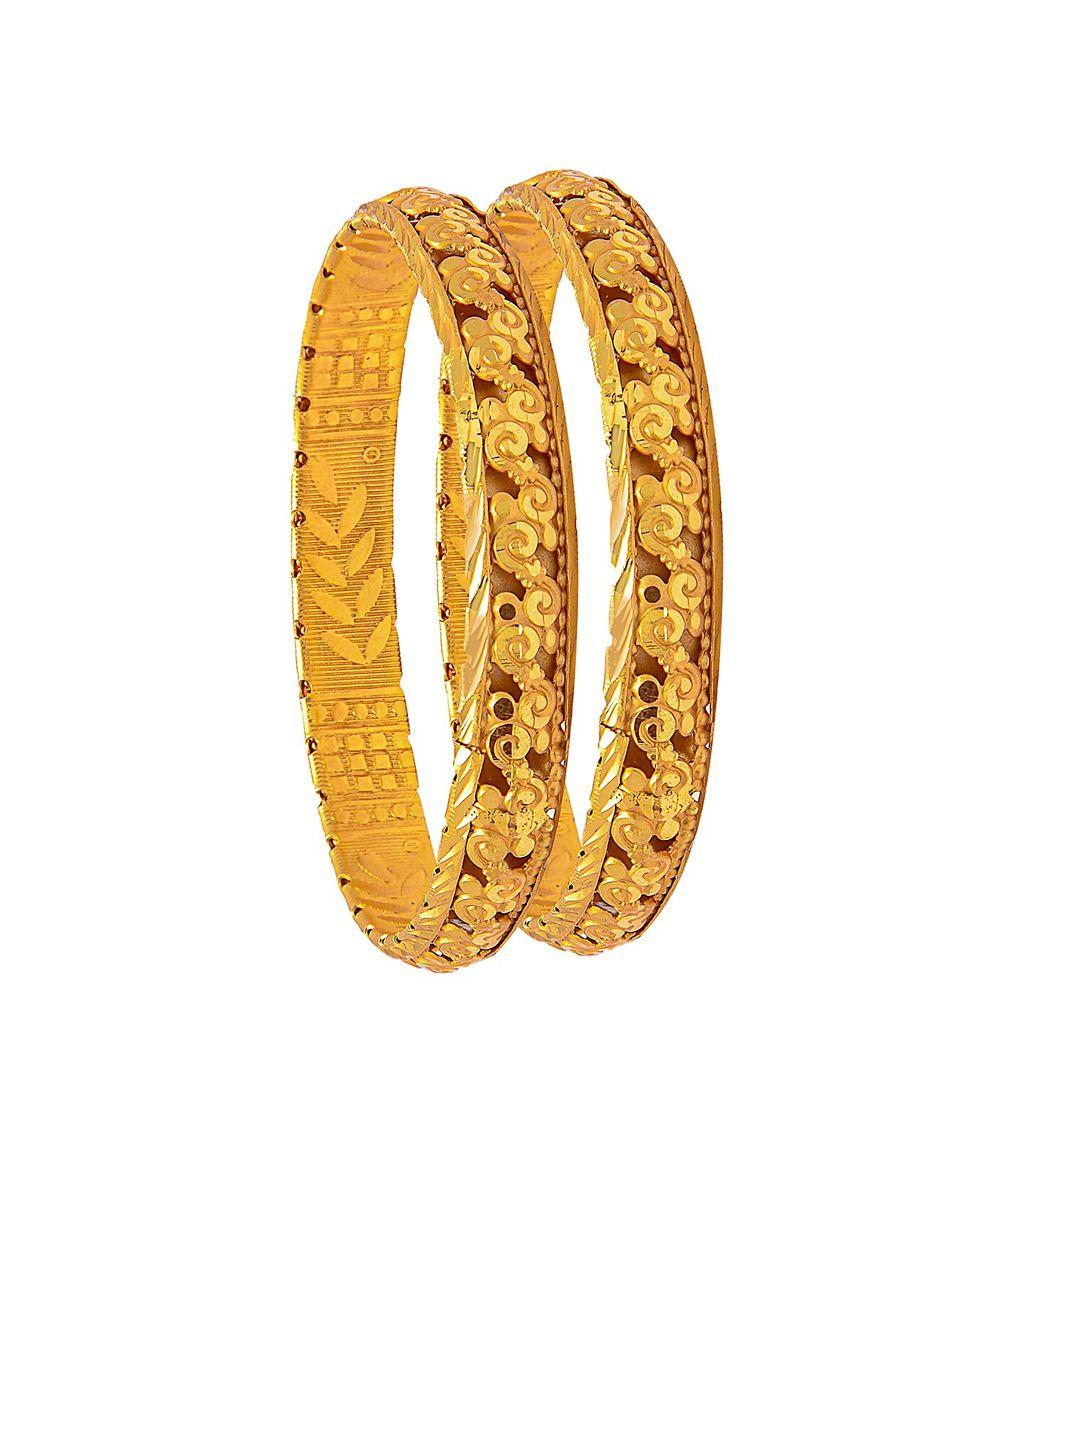 shining-jewel---by-shivansh-set-of-2-gold-plated-bangles